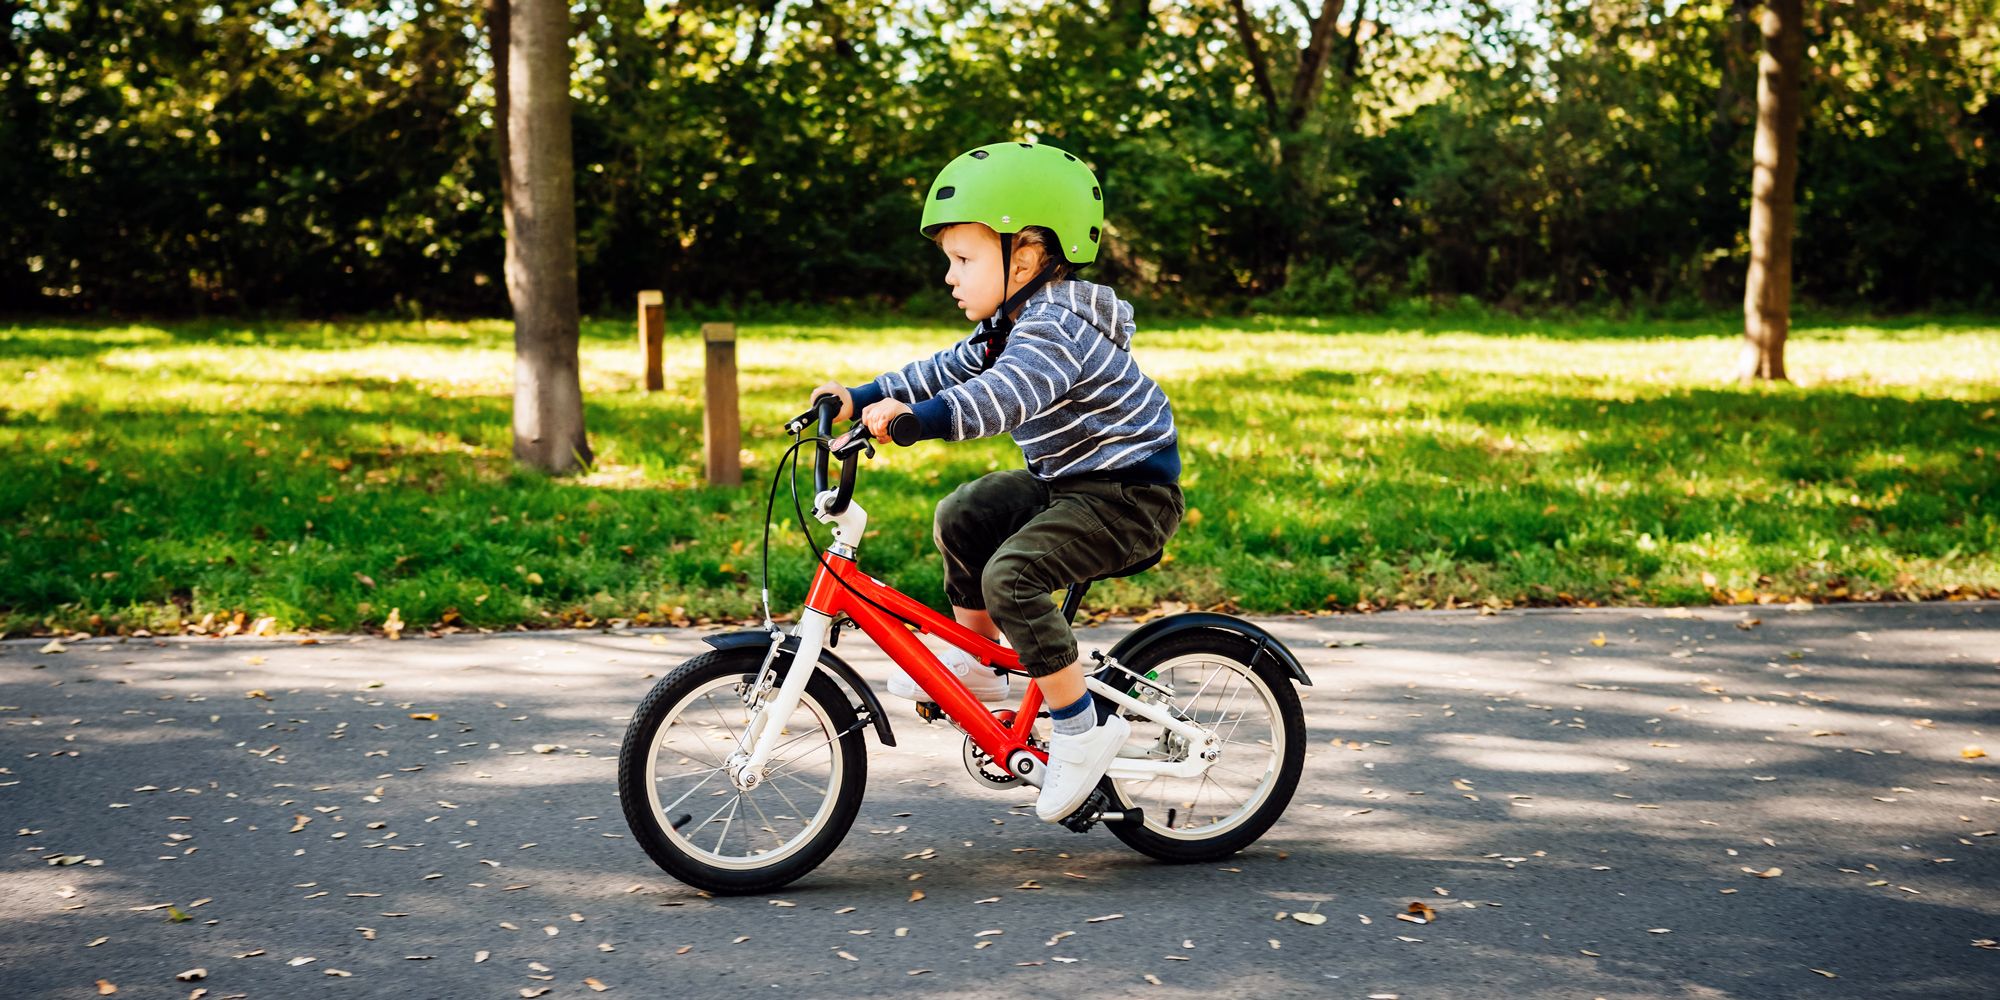 Co-op Cycles REV 20 6-Speed Plus Kids' Mountain Bike. USED